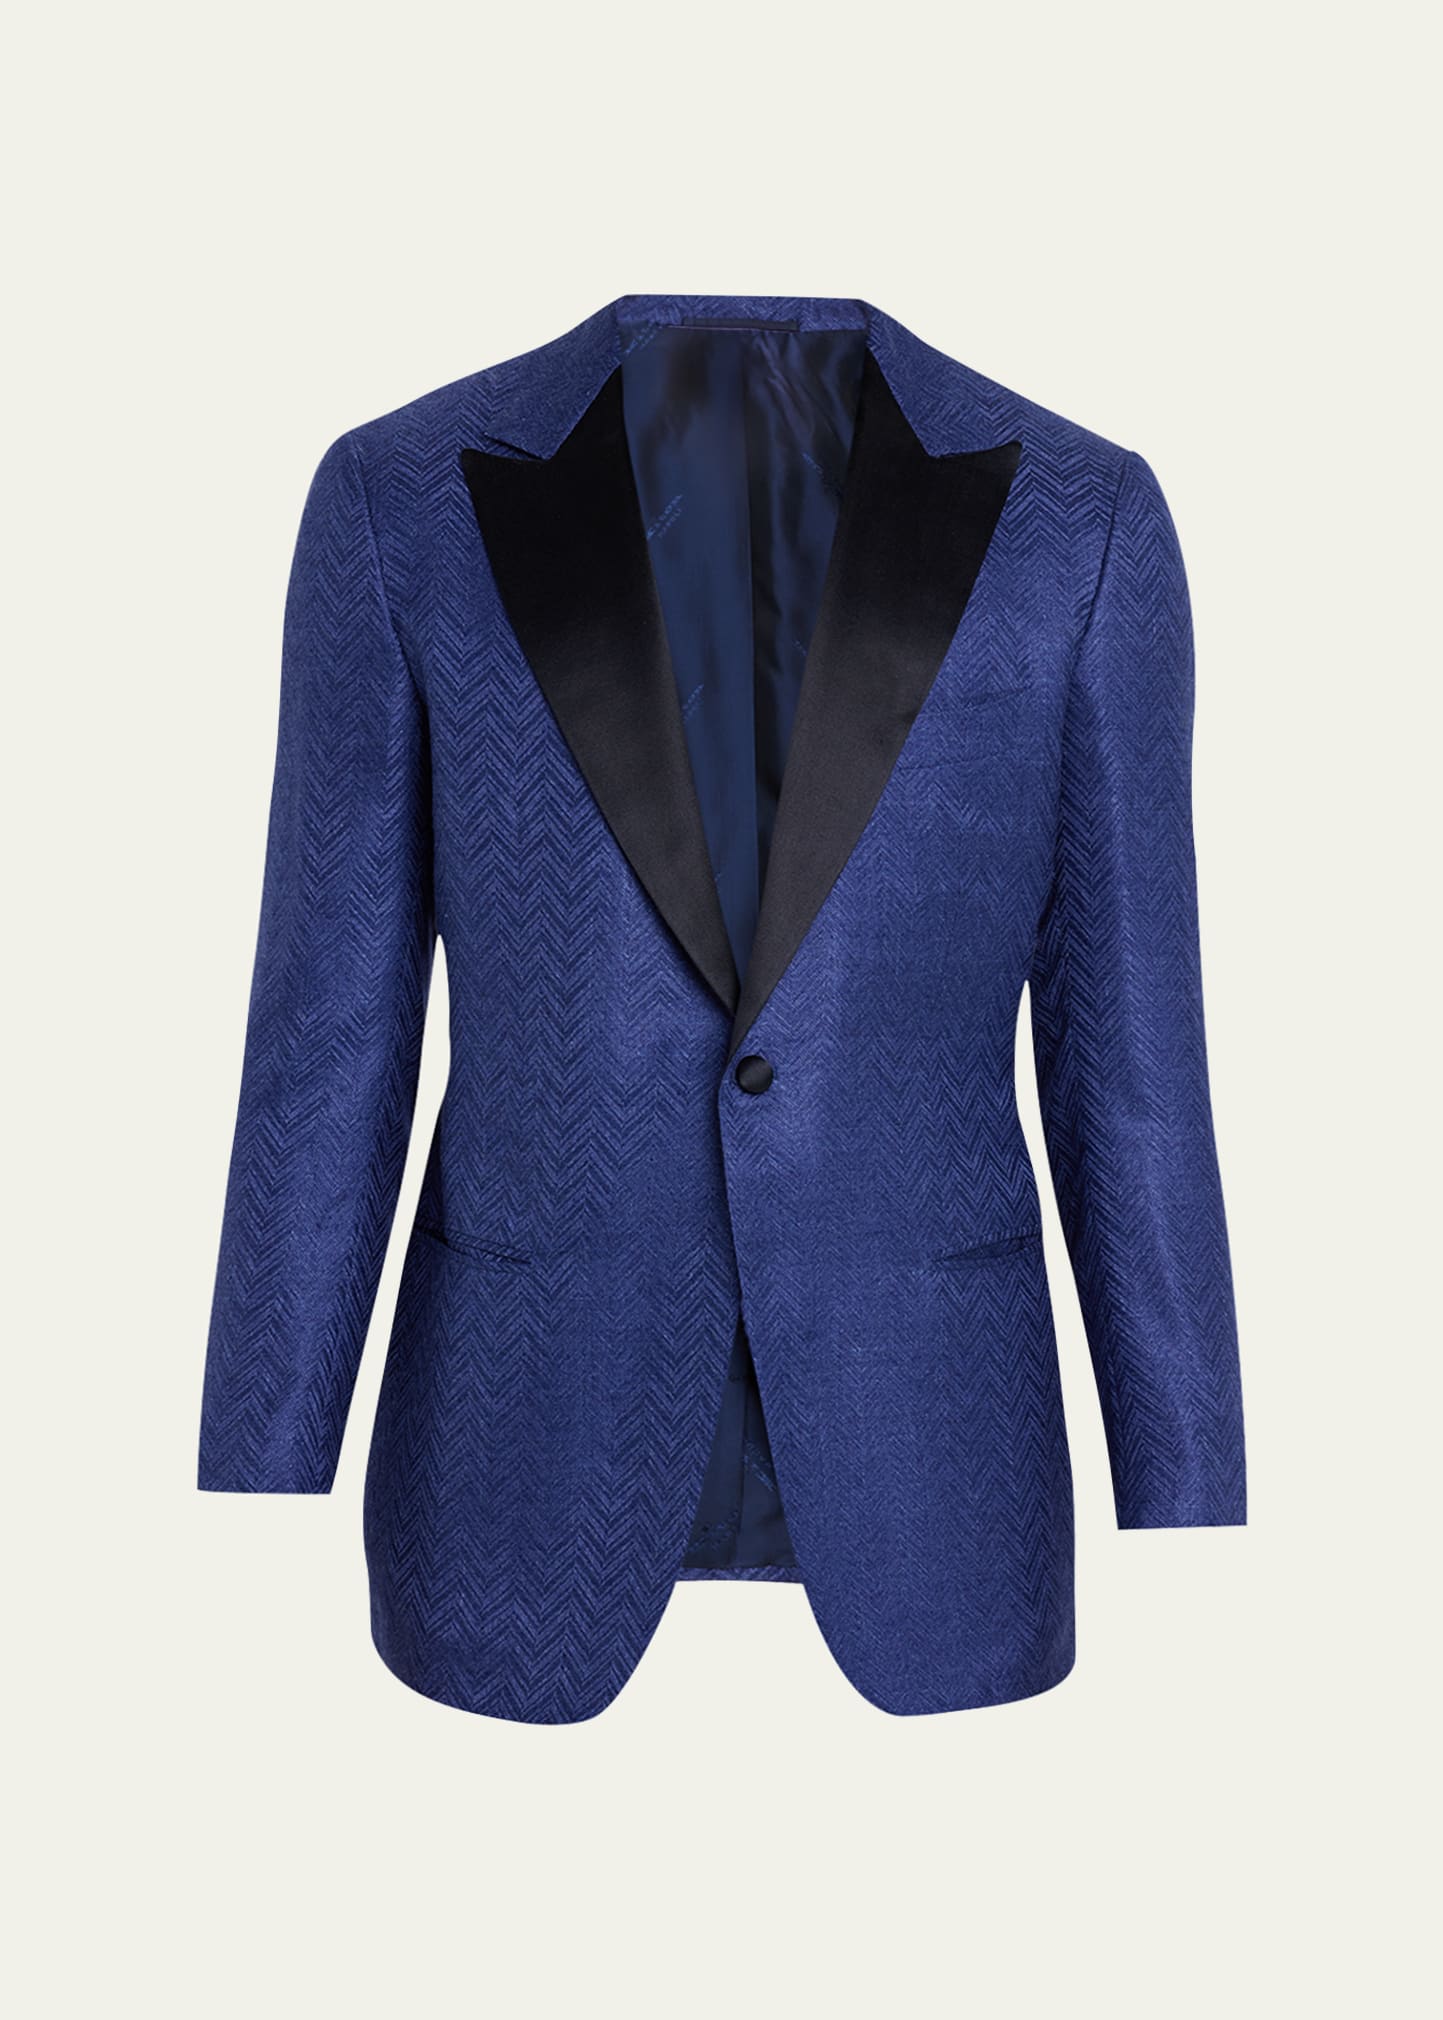 Kiton Men's Herringbone Jacquard Peak Dinner Jacket In Blu